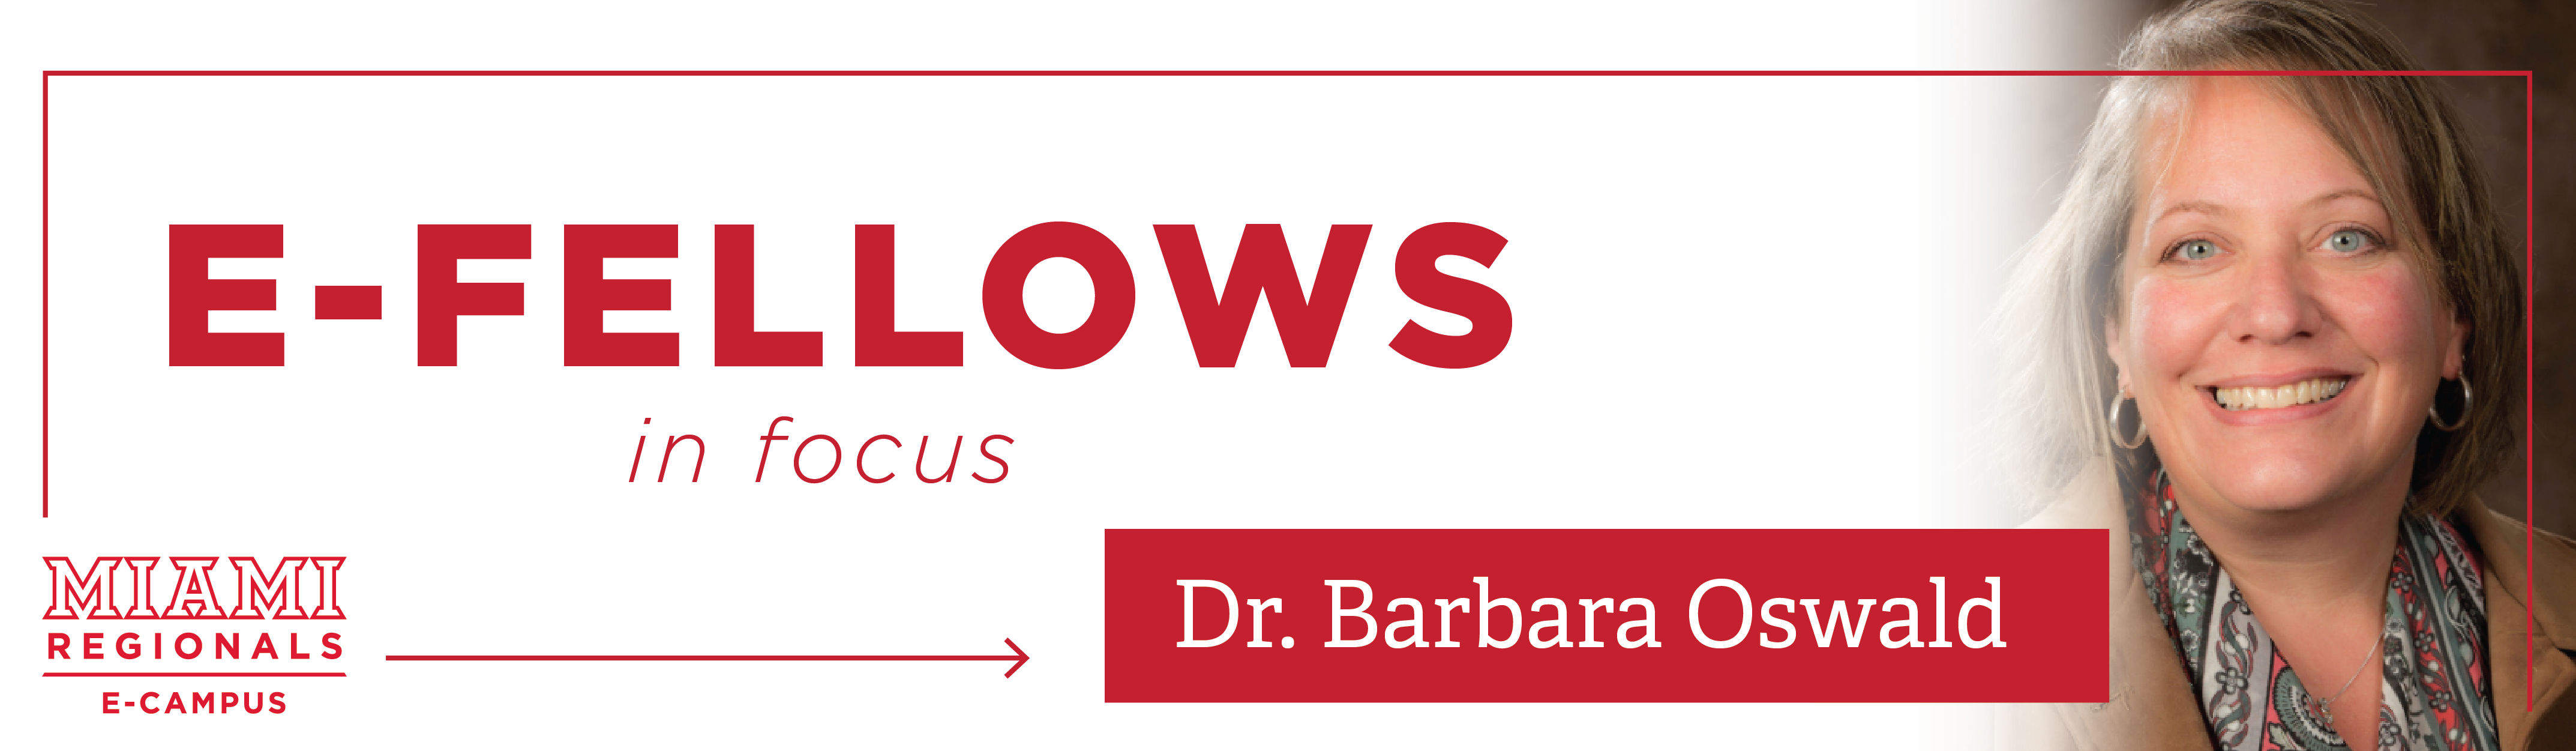 E-Fellows in Focus: Dr. Barbara Oswald Miami Regionals E-Campus